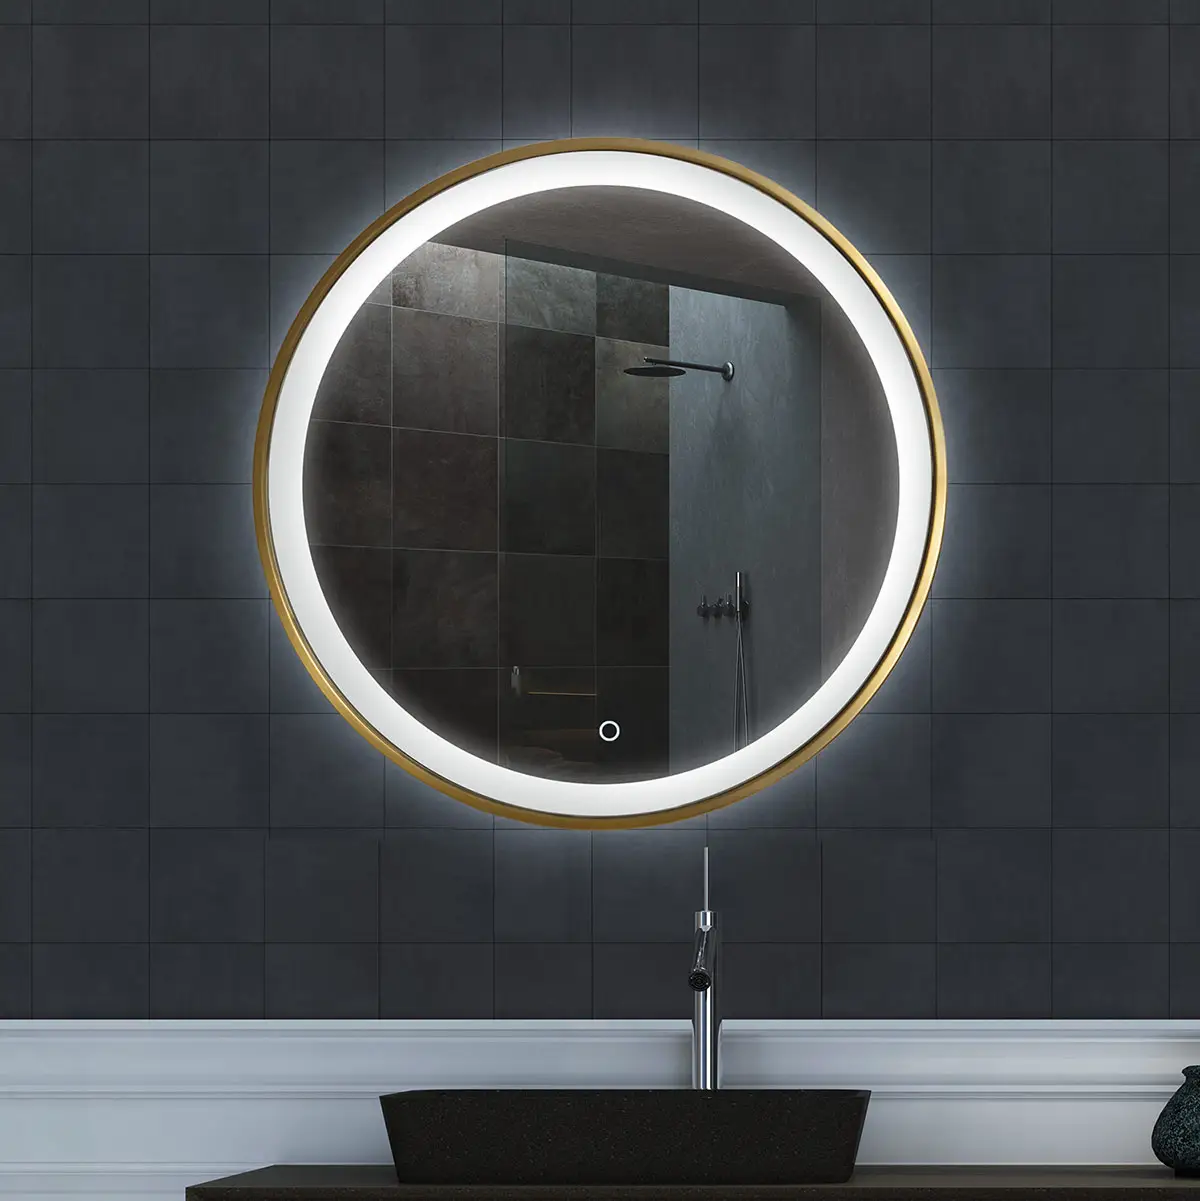 2020 fábrica venta directa de vuelta-lit de pantalla táctil inteligente montaje en pared, luz de Led iluminado espejo de baño